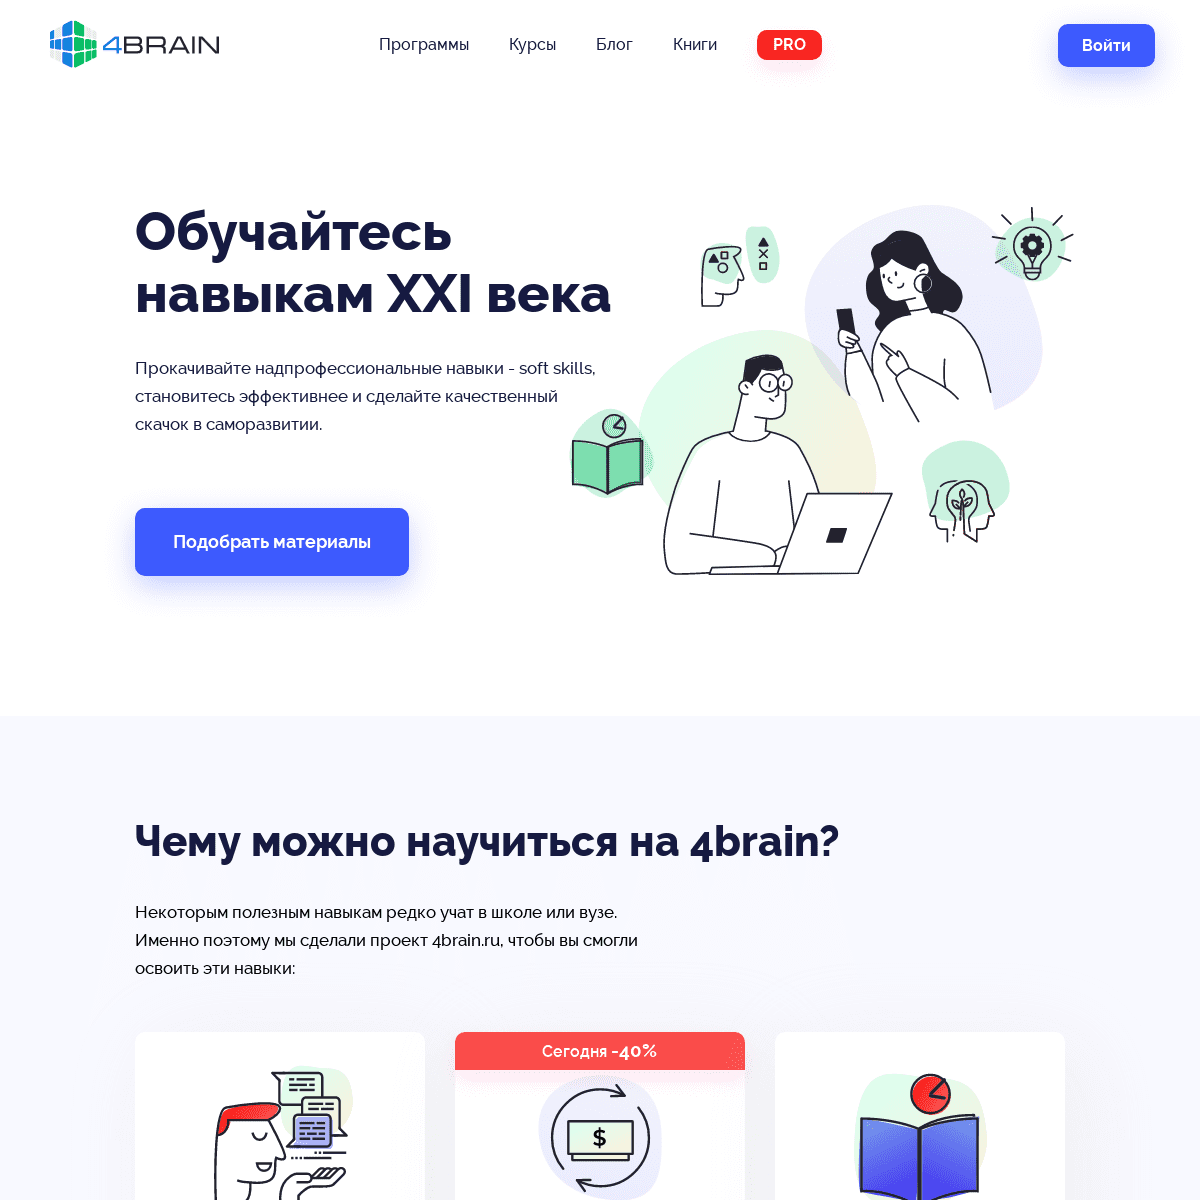 A complete backup of 4brain.ru